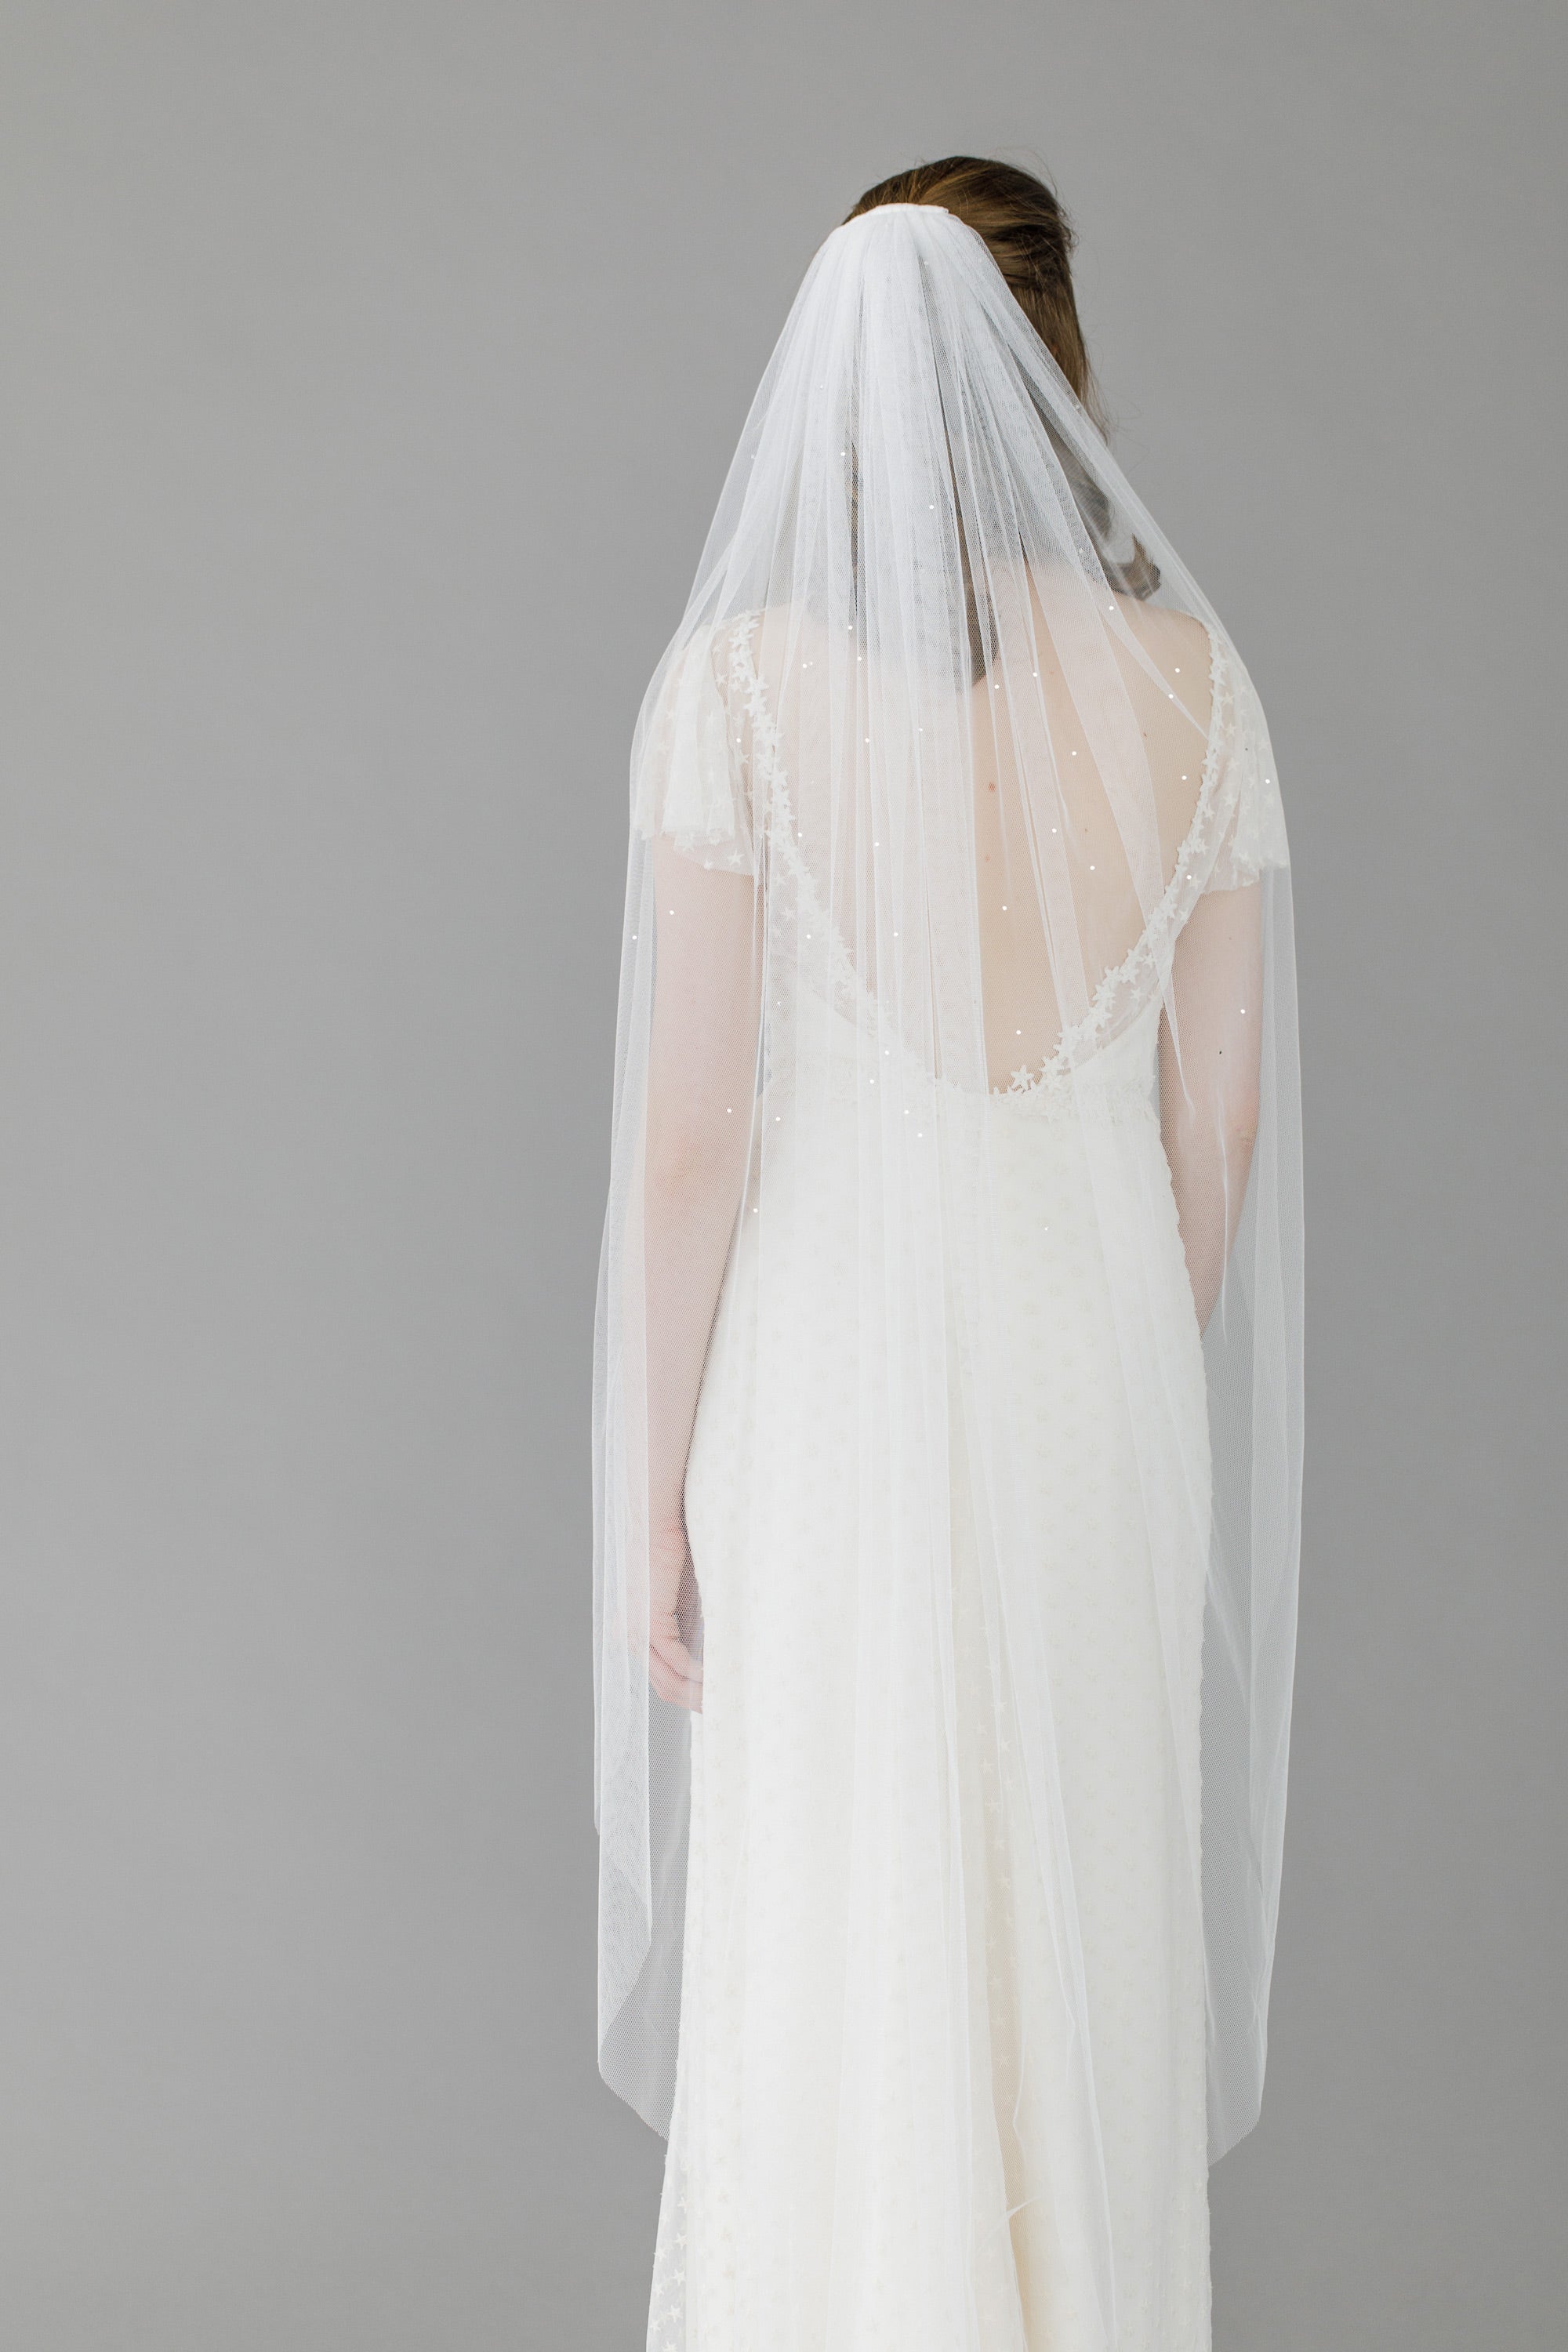 ballet length wedding veil